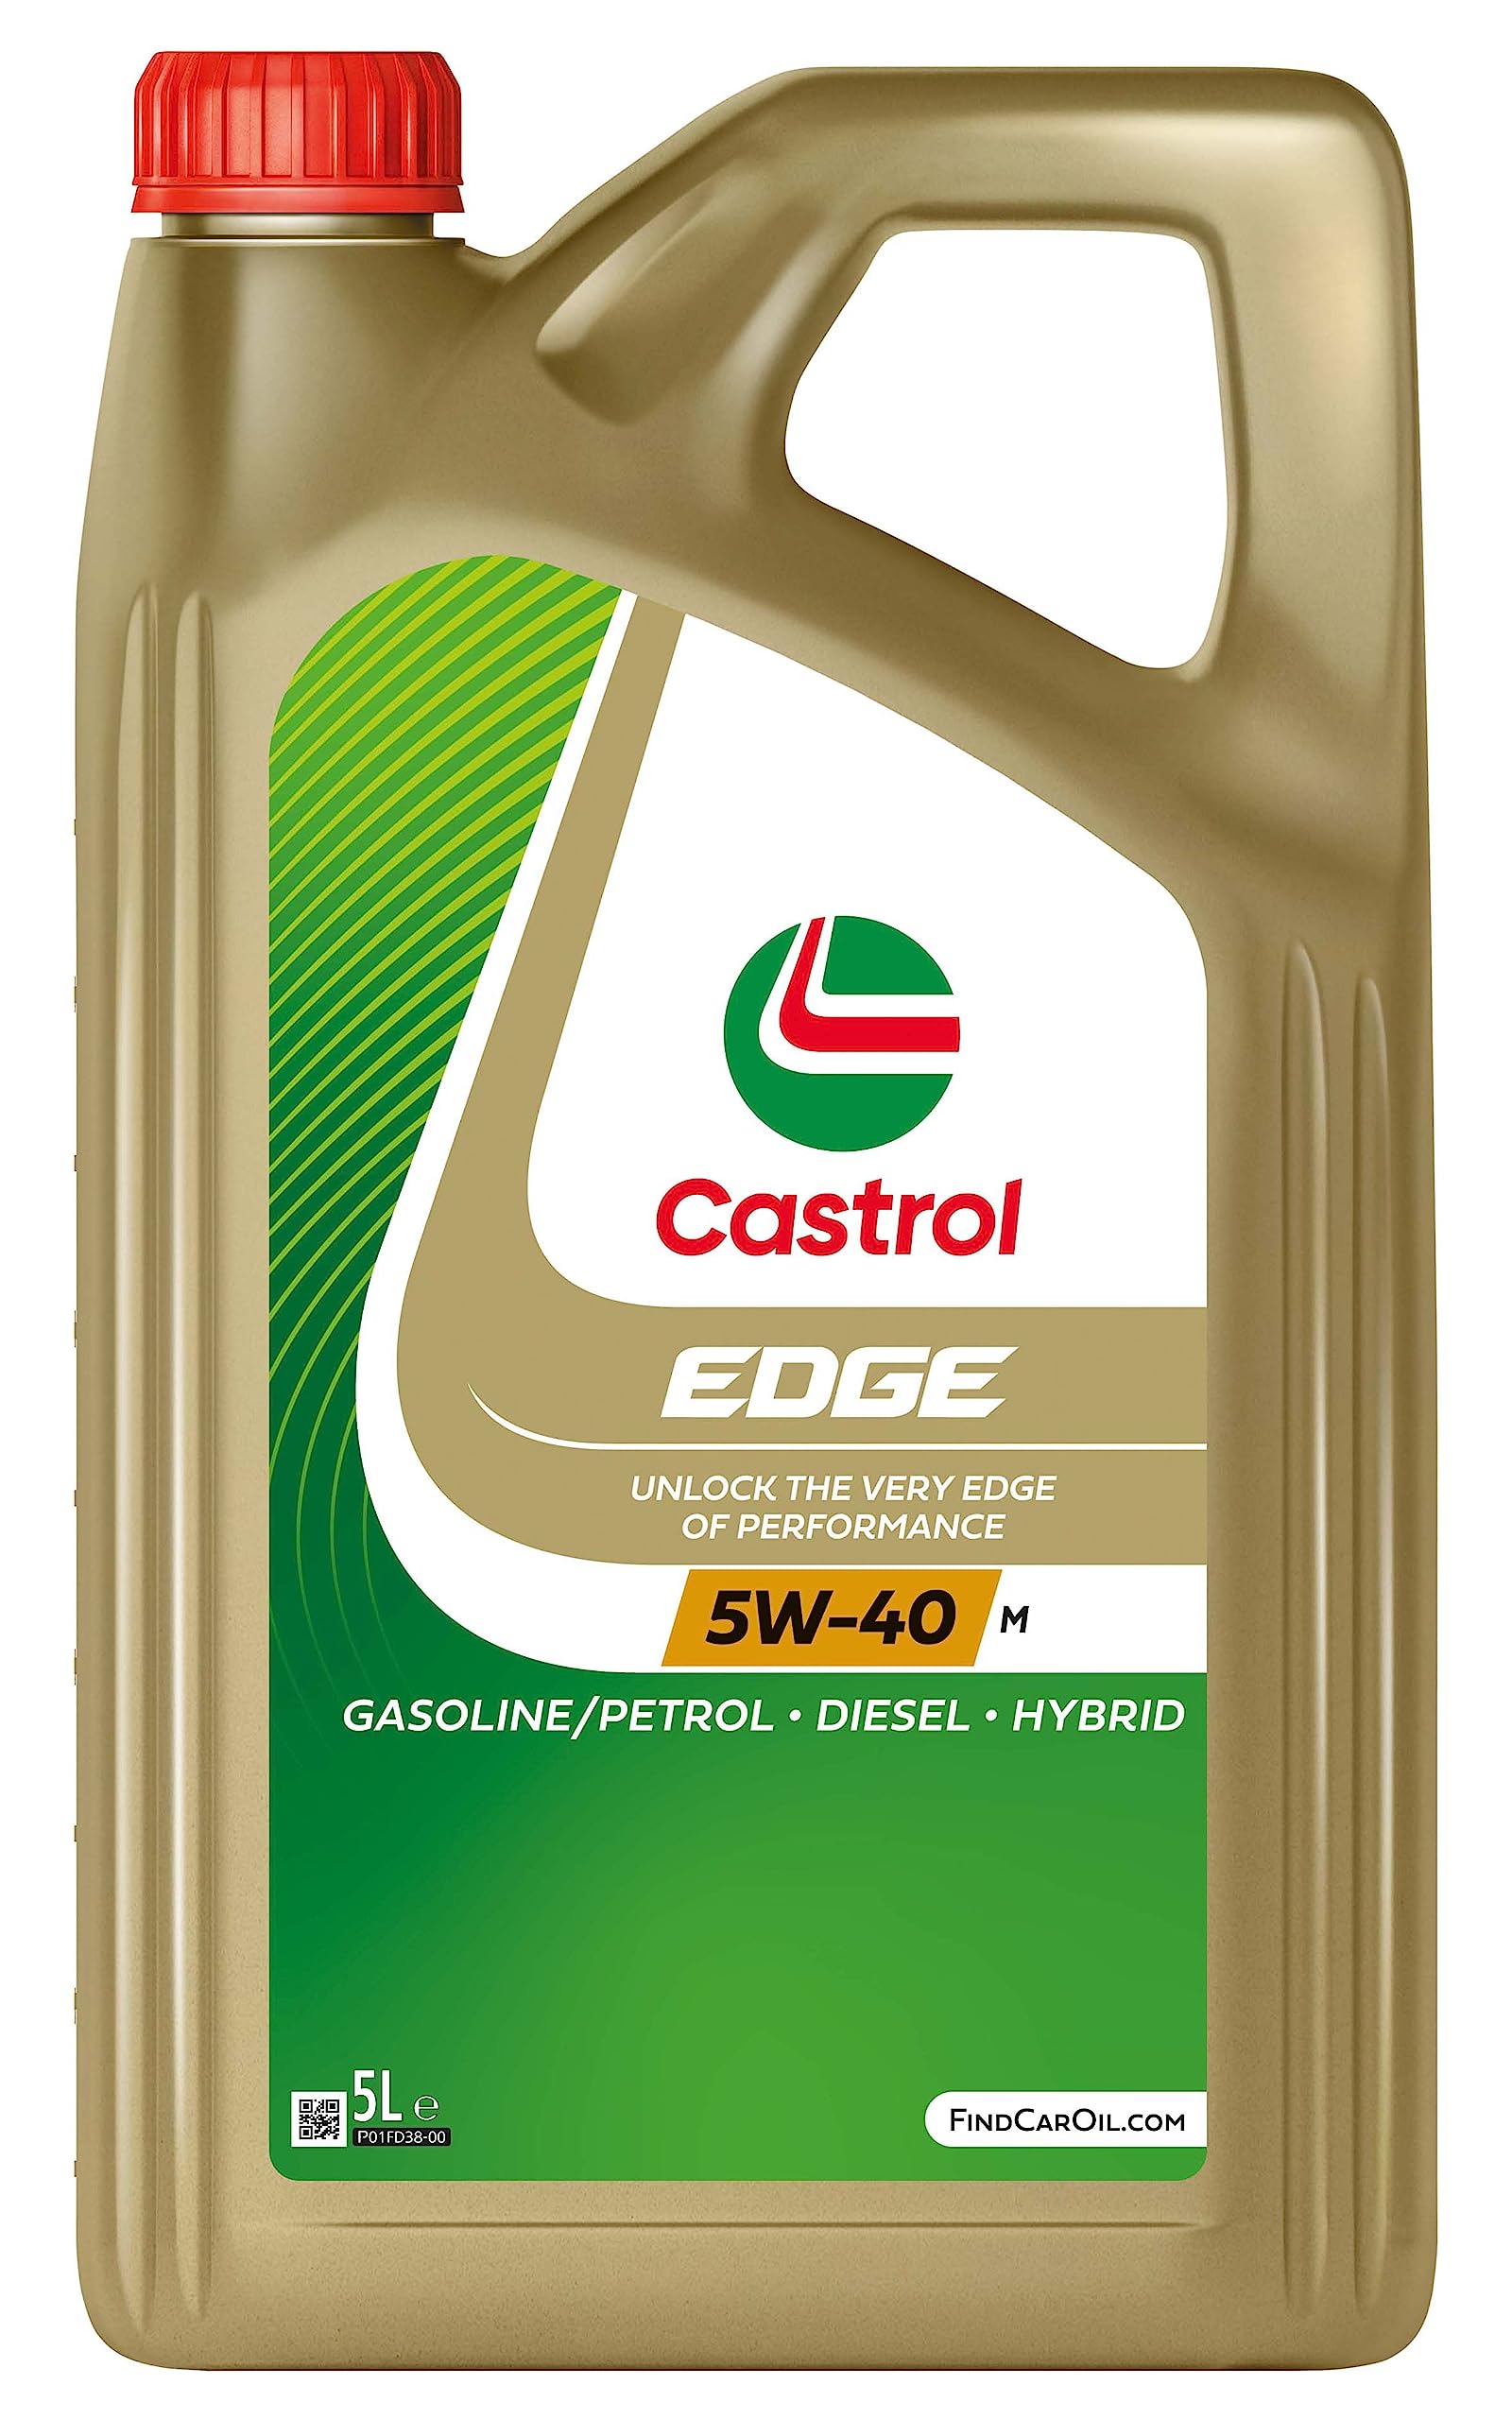 Castrol EDGE 5W-40 M Motoröl, 5L von Castrol